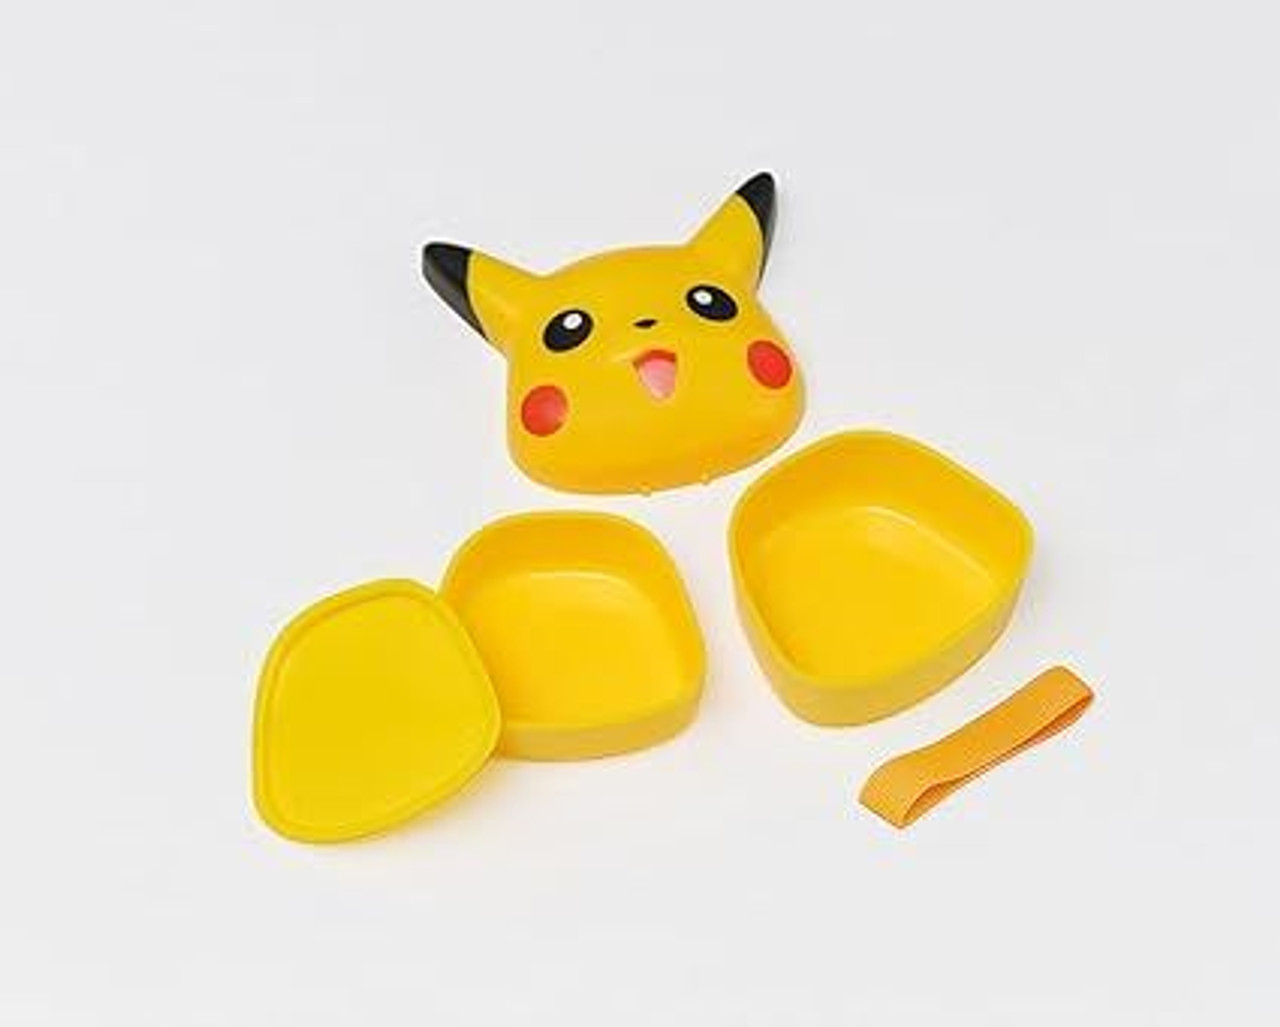 Skater Bento Box Pikachu 650ml